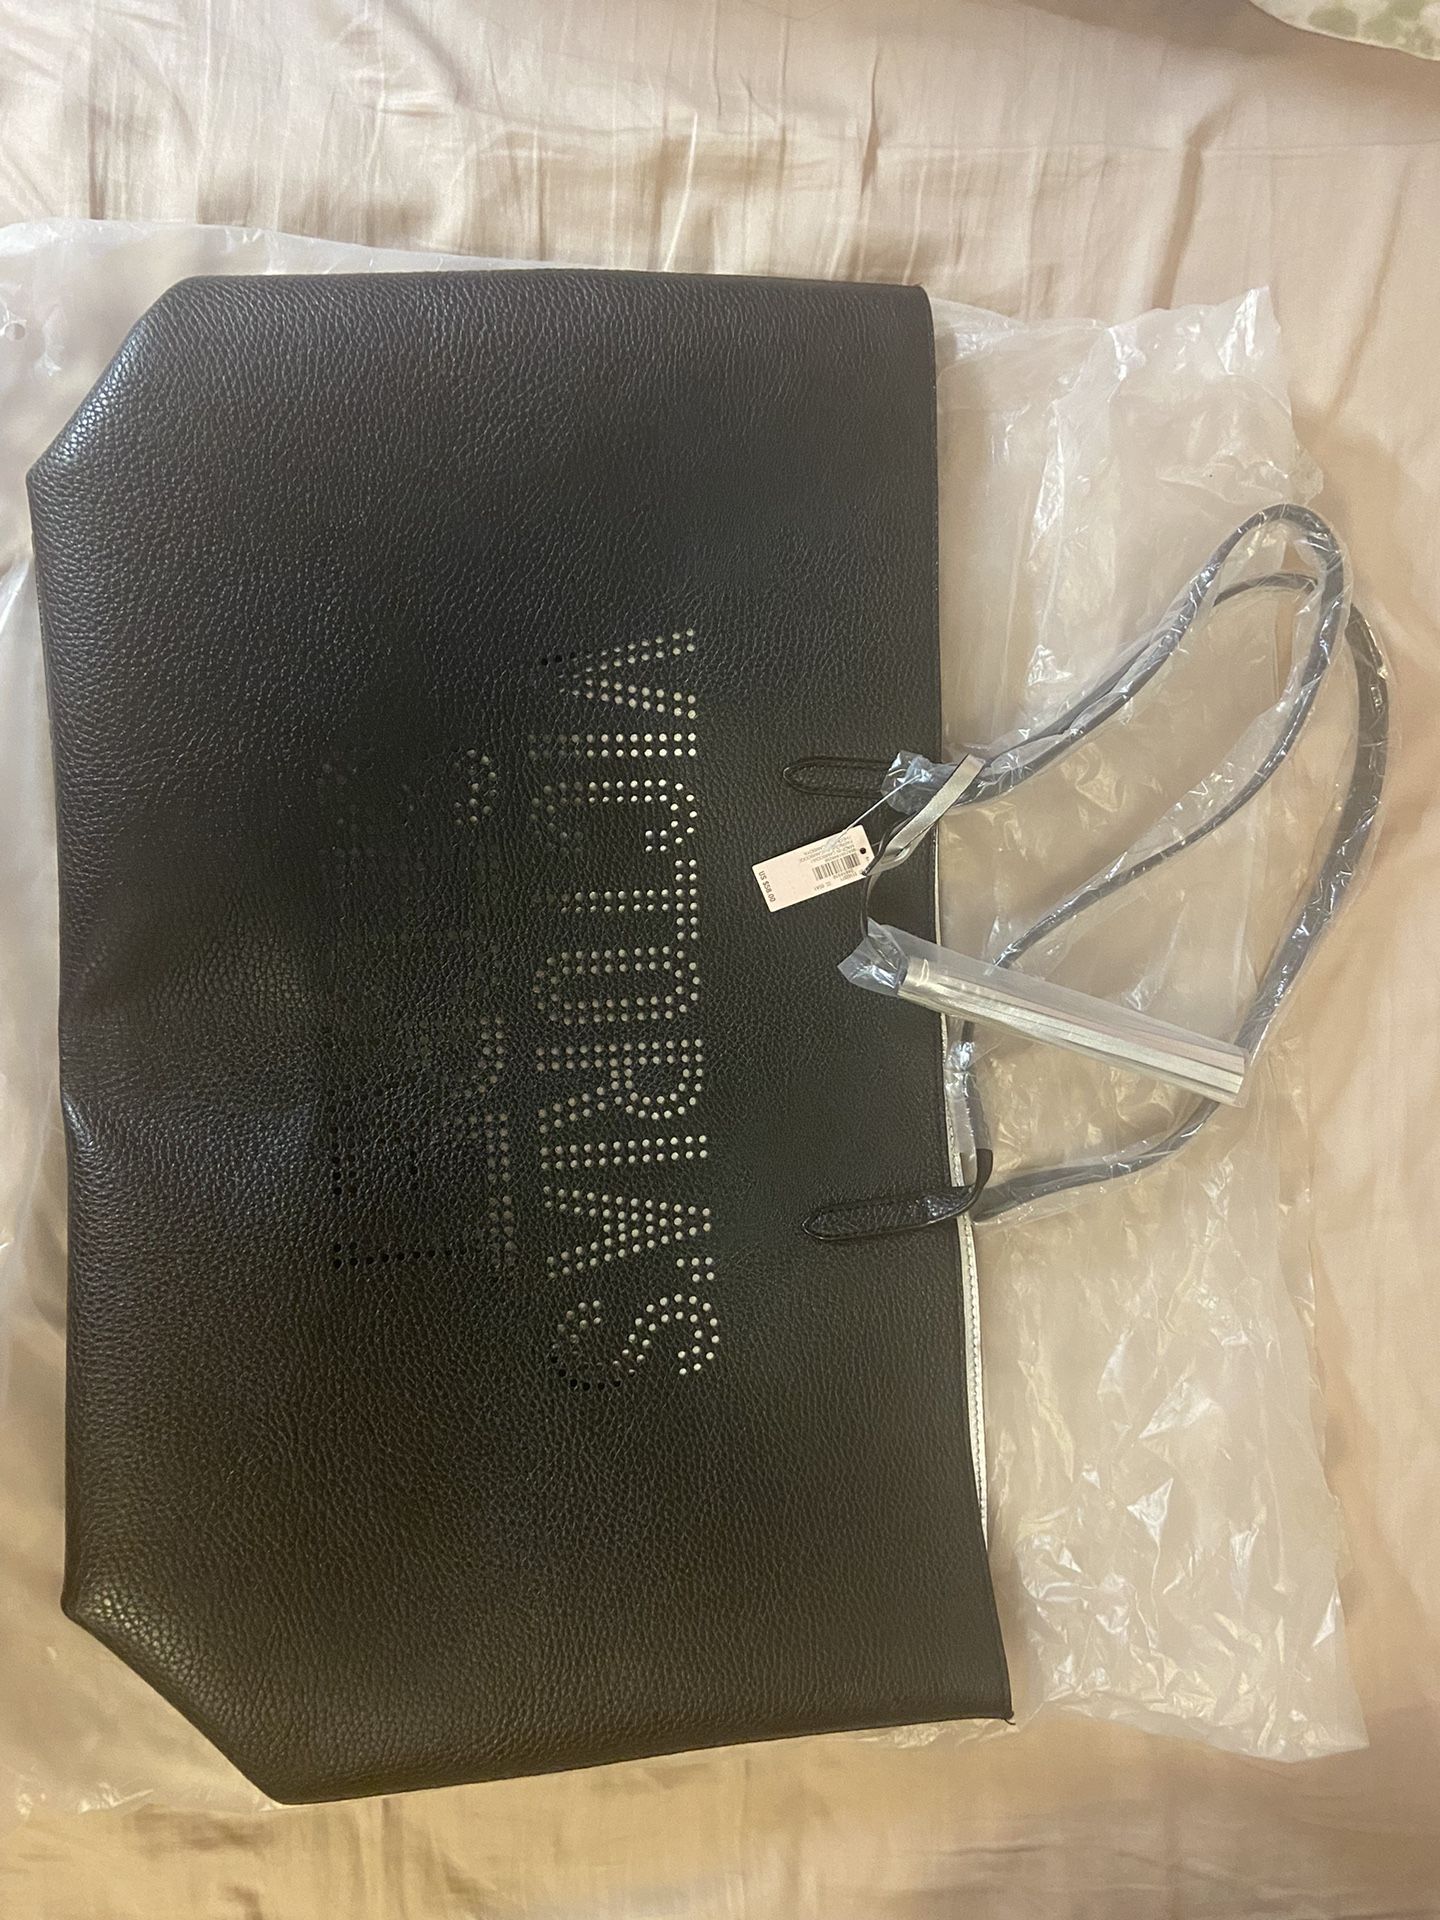 NEW Victoria’s Secret Black Tote Bag